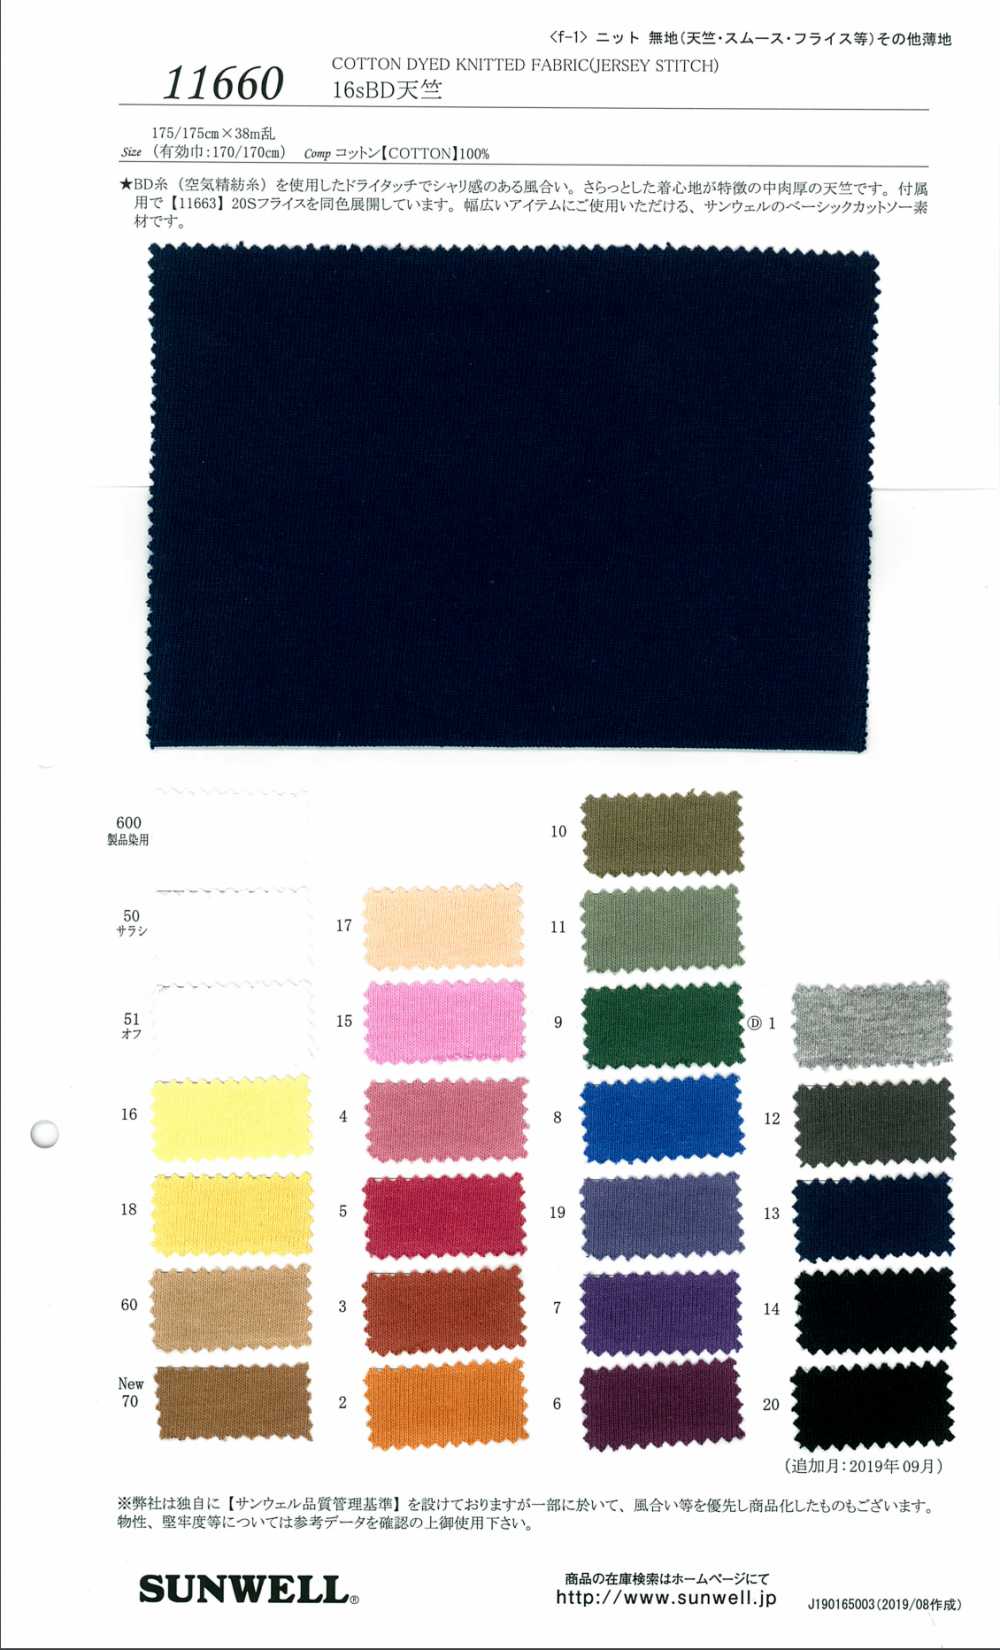 11660 Jersey De Coton 16sBD[Fabrication De Textile] SUNWELL